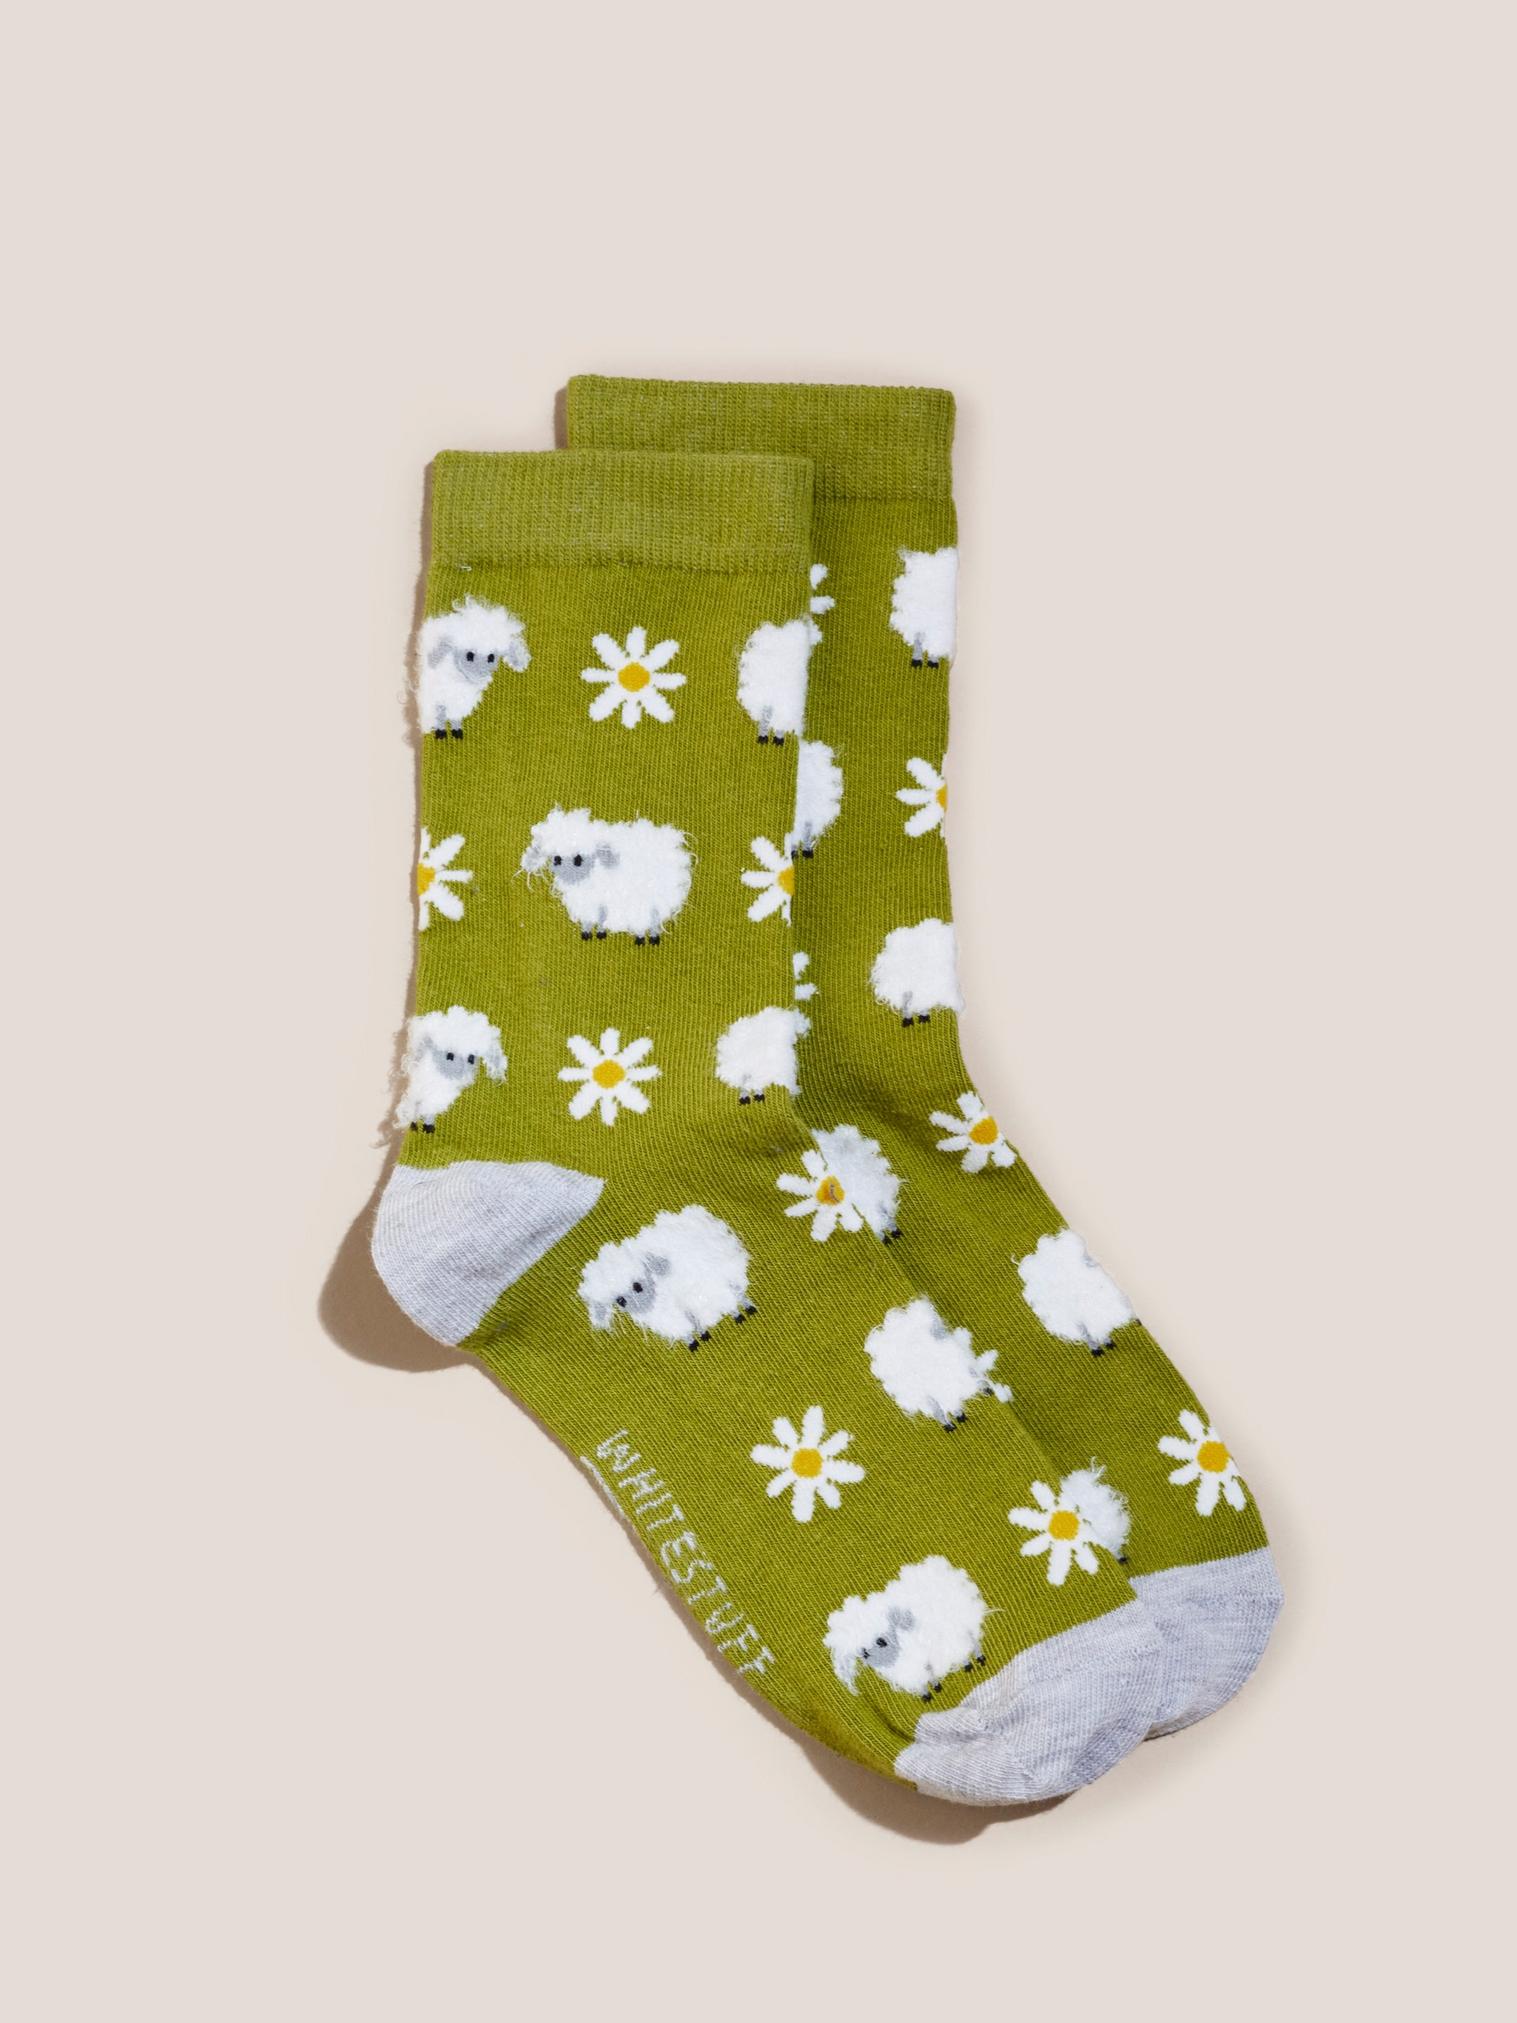 Fluffy Sheep Socks in GREEN MLT - FLAT FRONT